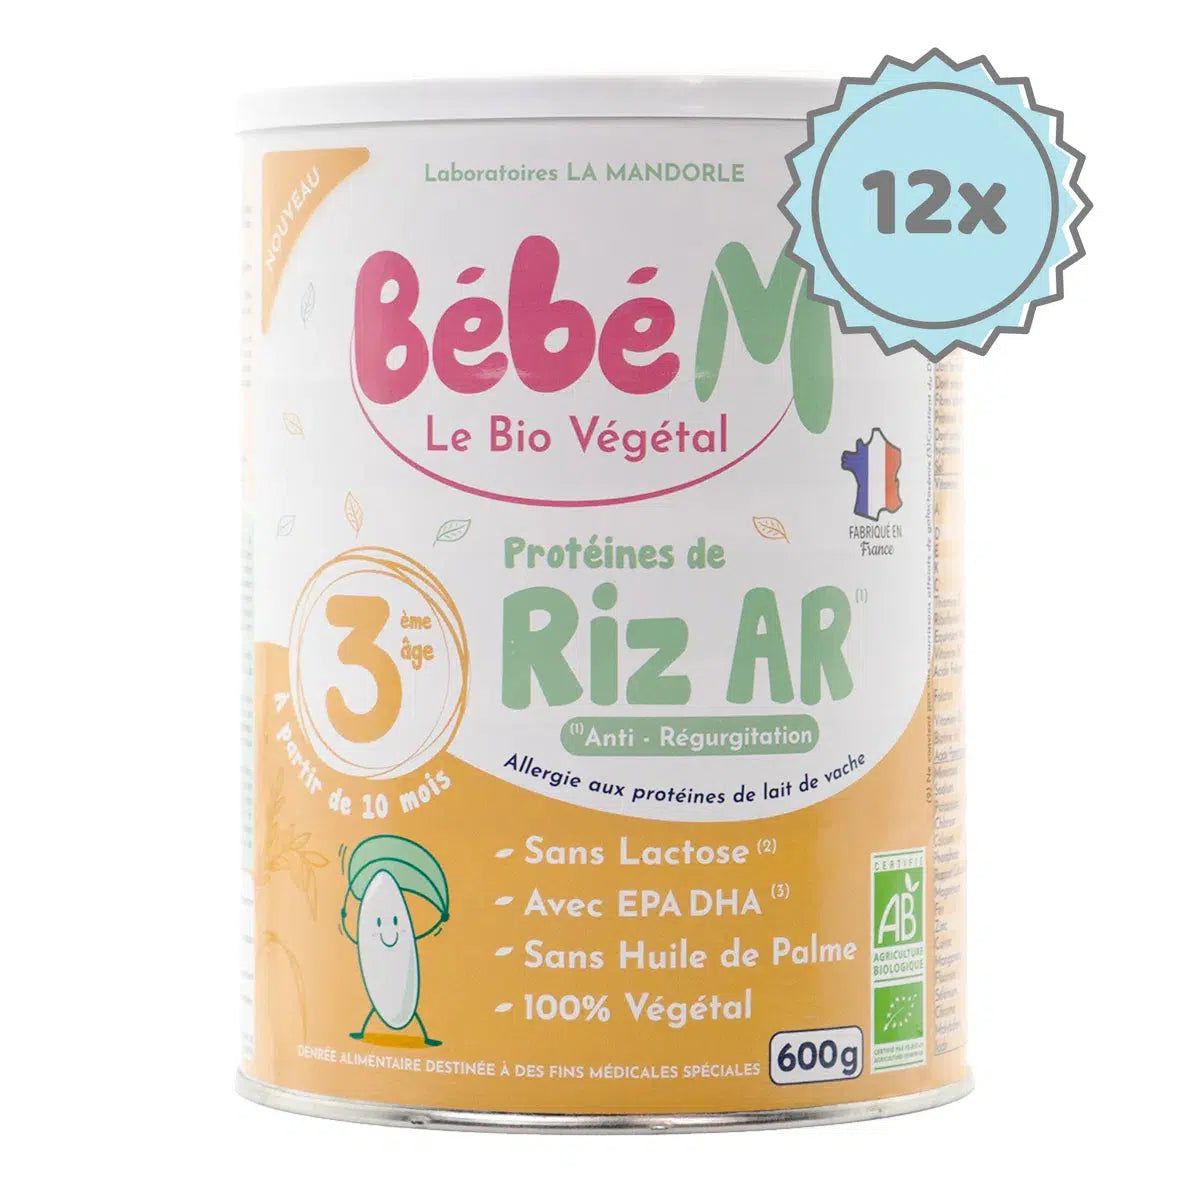 Bebe M (Bebe Mandorle) Organic Anti-Reflux Rice-Based Formula - Stage 3 (10+ months) | Organic Baby Formula | 12 cans